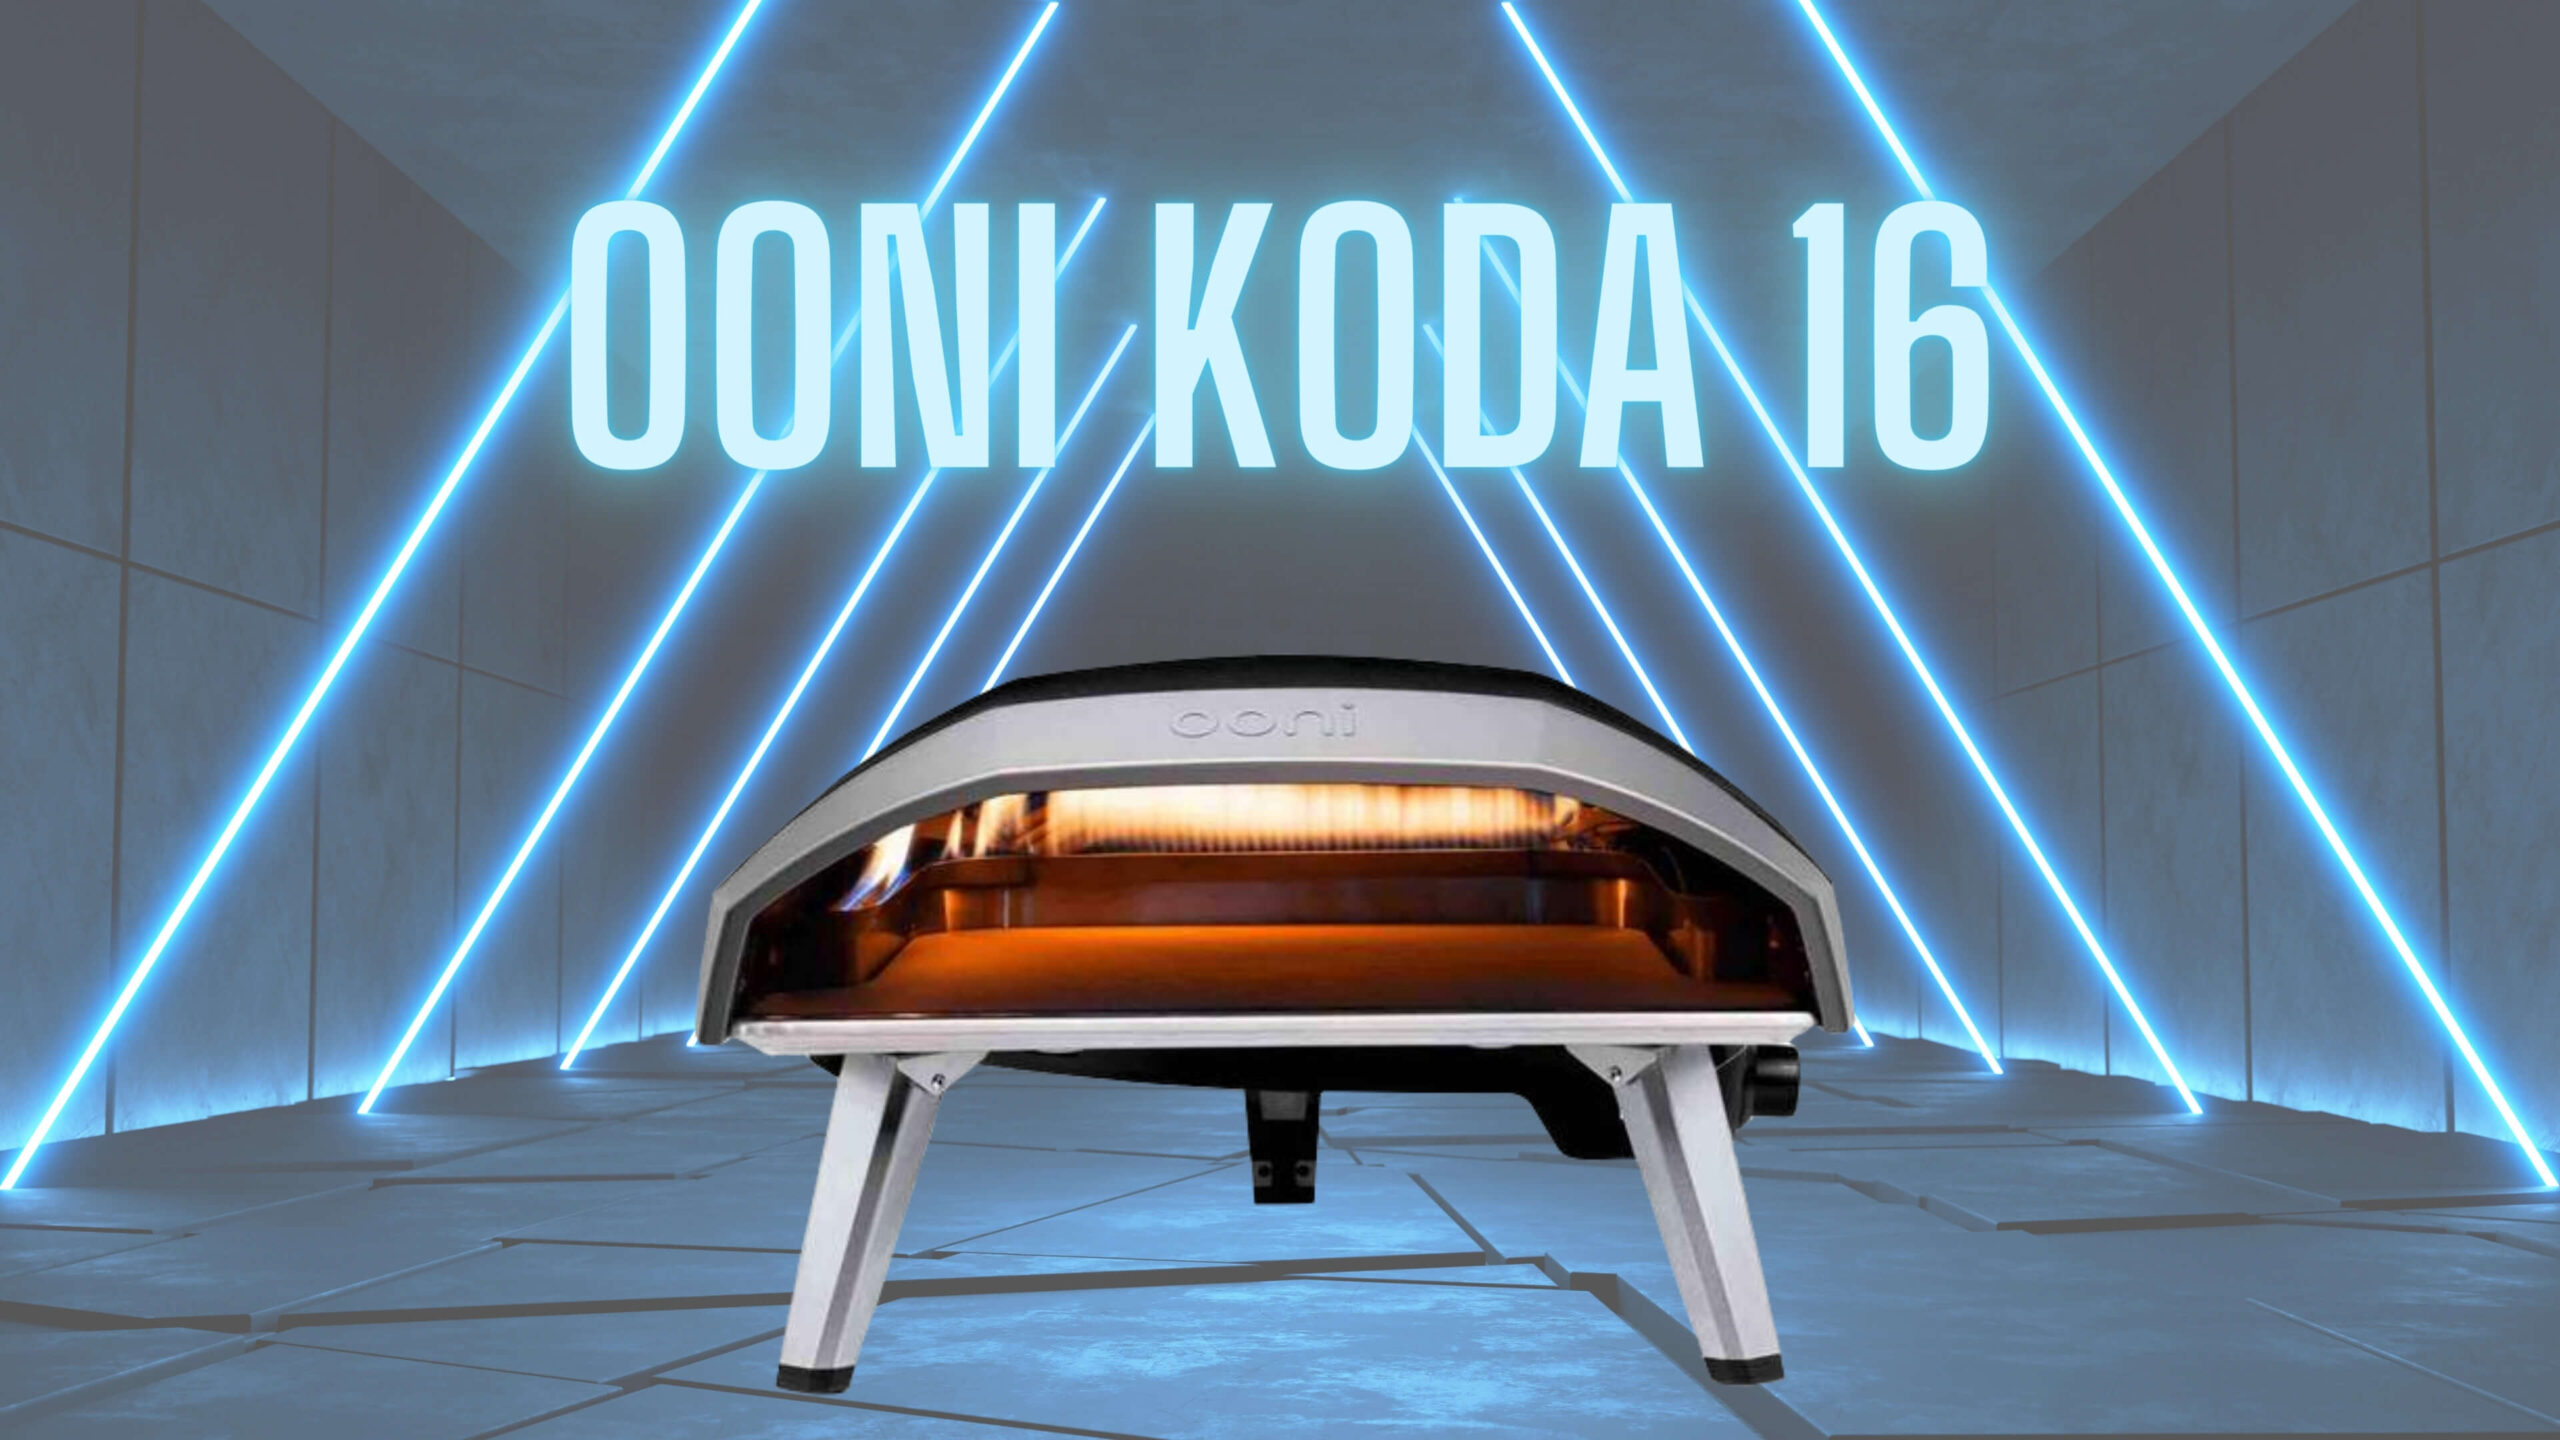 ooni koda 16 with customized background